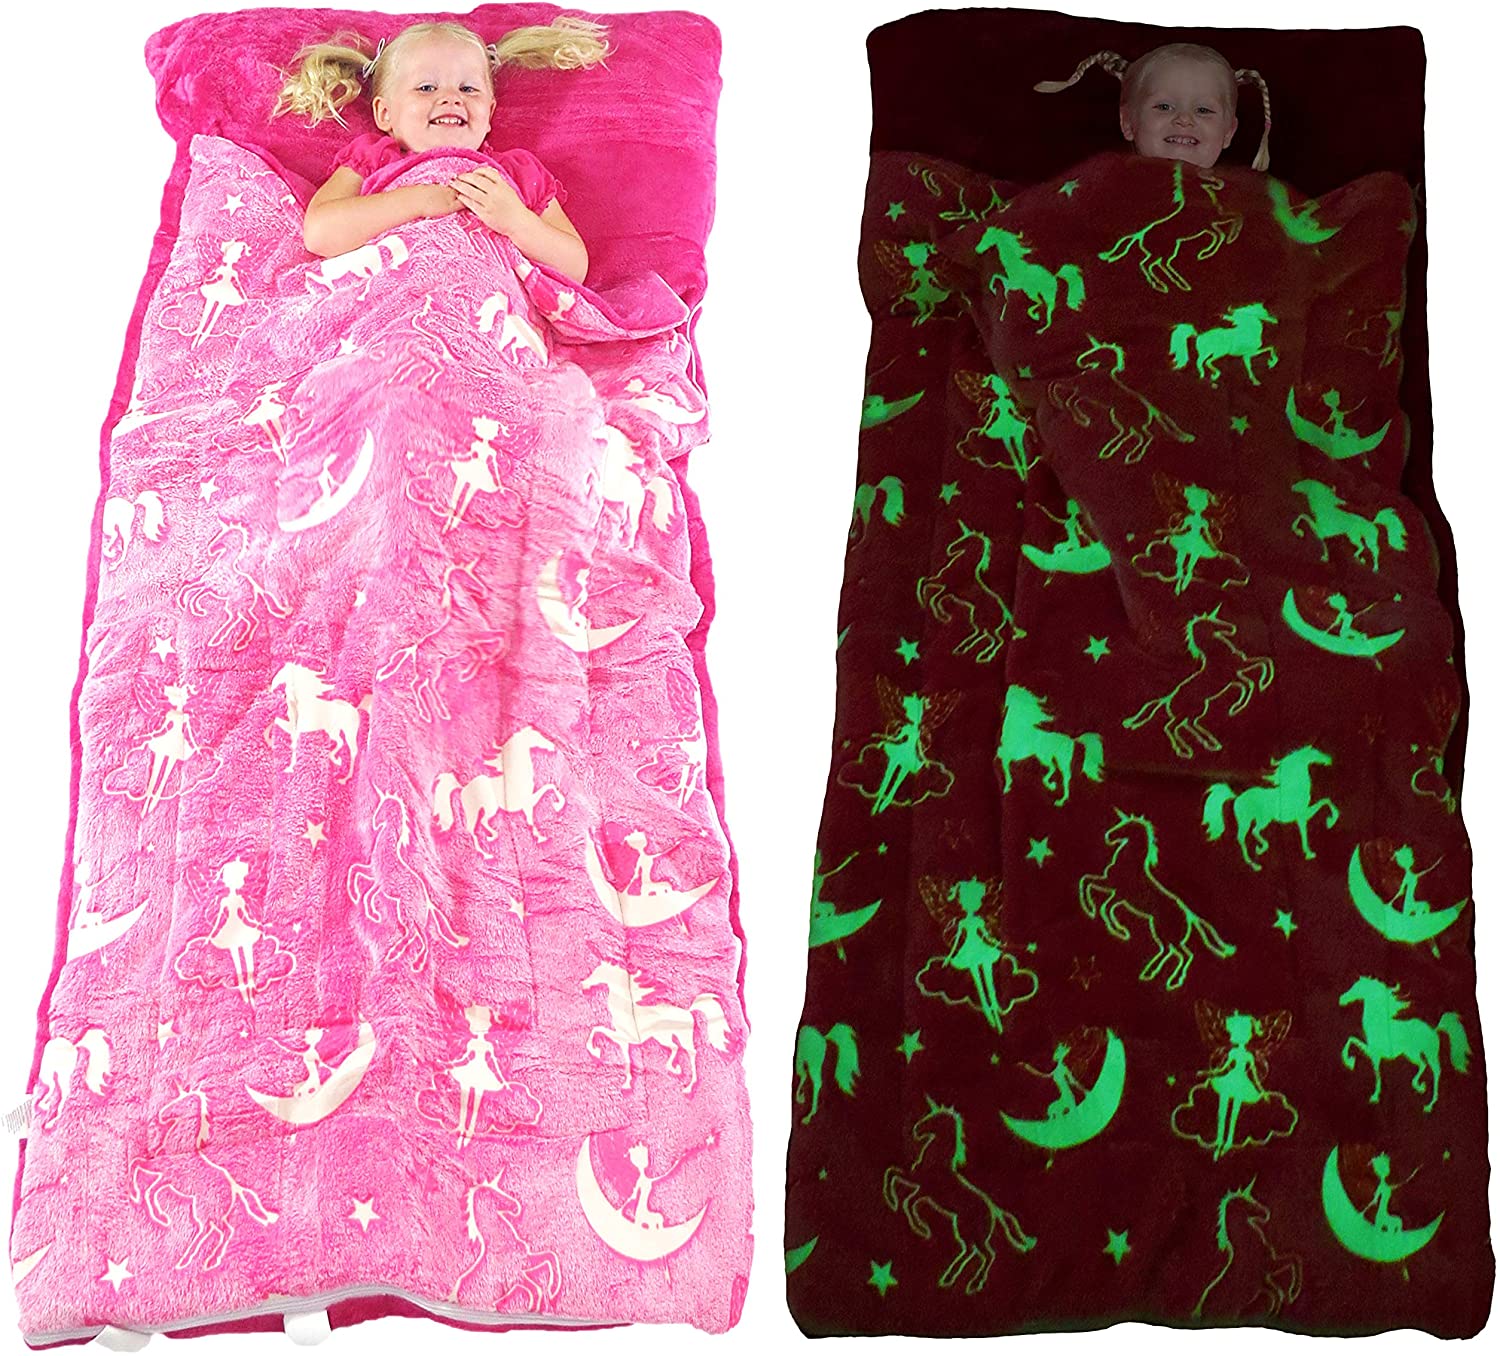 DreamsBe Glow-In-The-Dark Fleece Unicorn Sleeping Bags For Girls